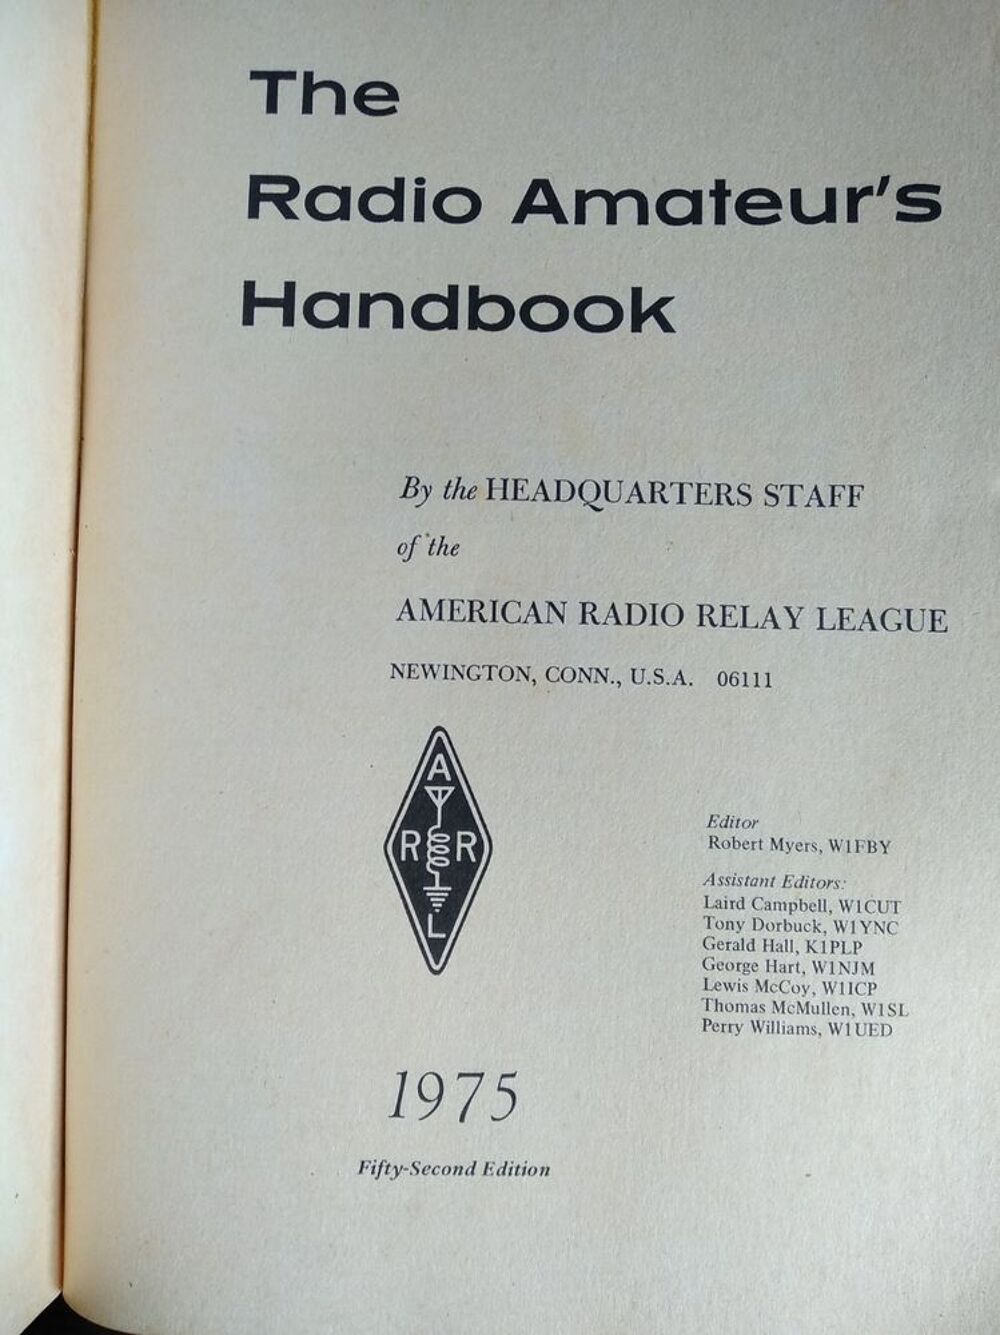 The radio amateur's handbook 1975 Matriel informatique